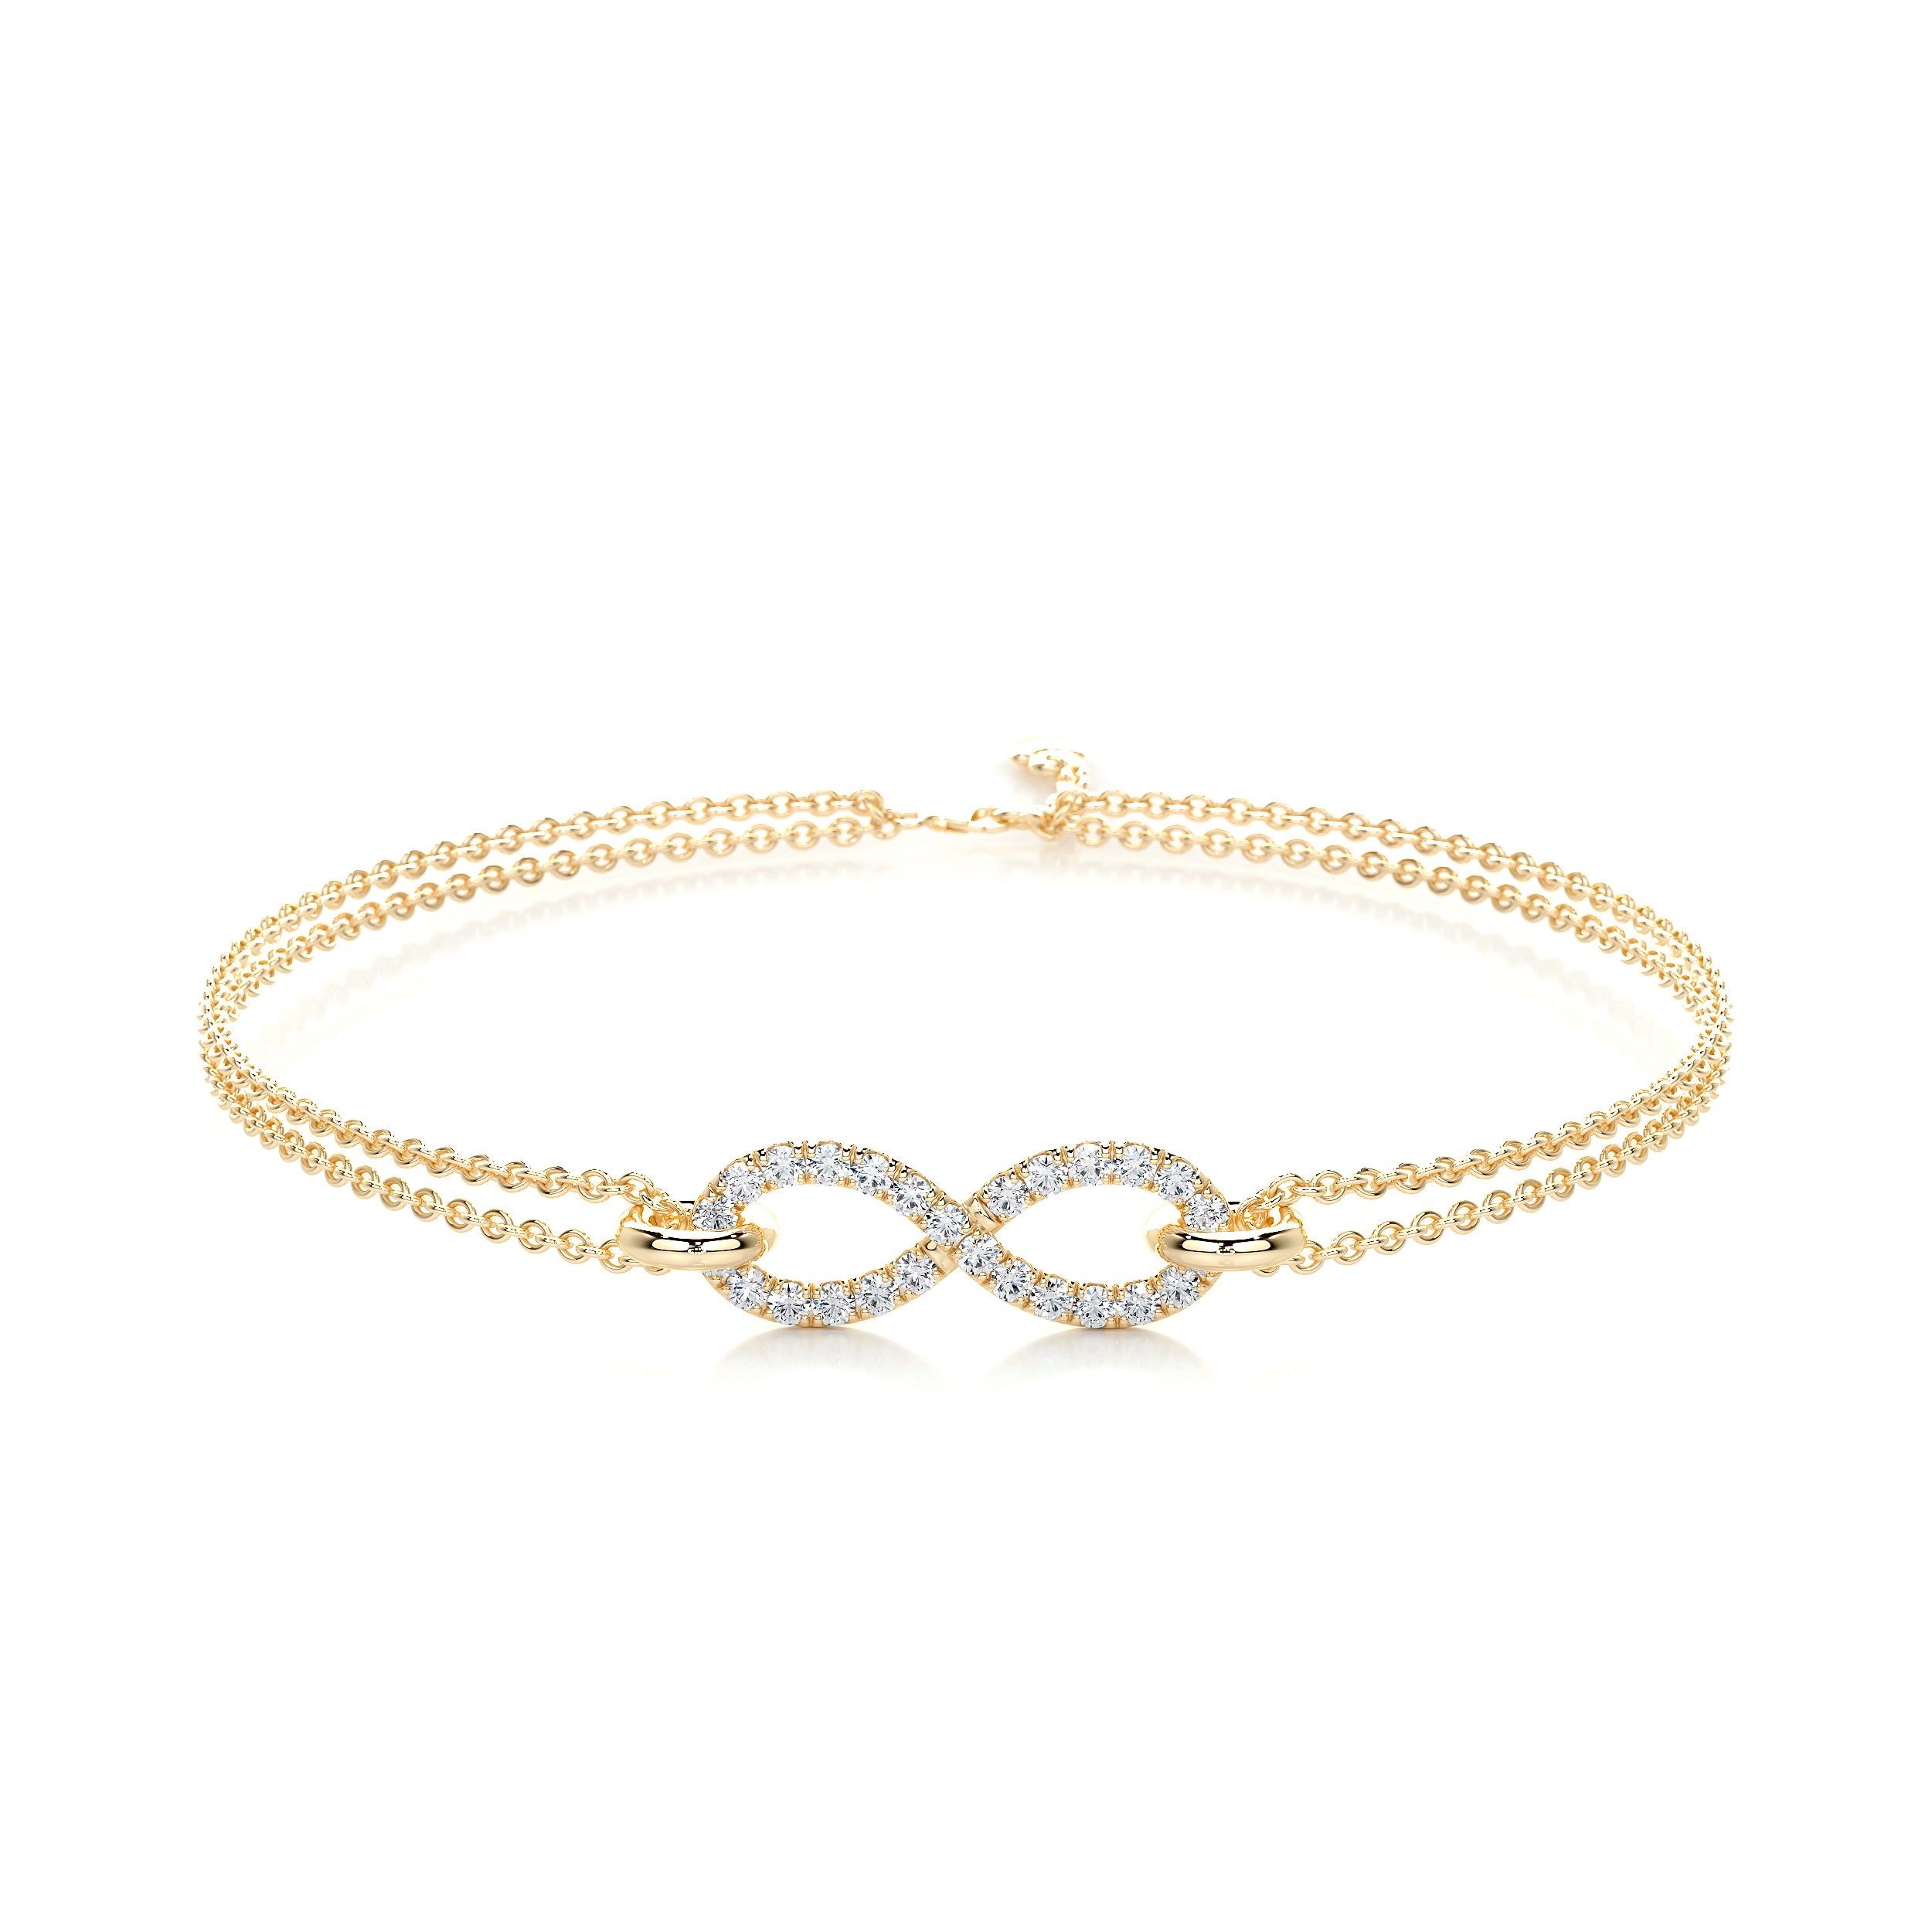 Debbie Diamonds Bracelet   (0.25 Carat) -18K Yellow Gold